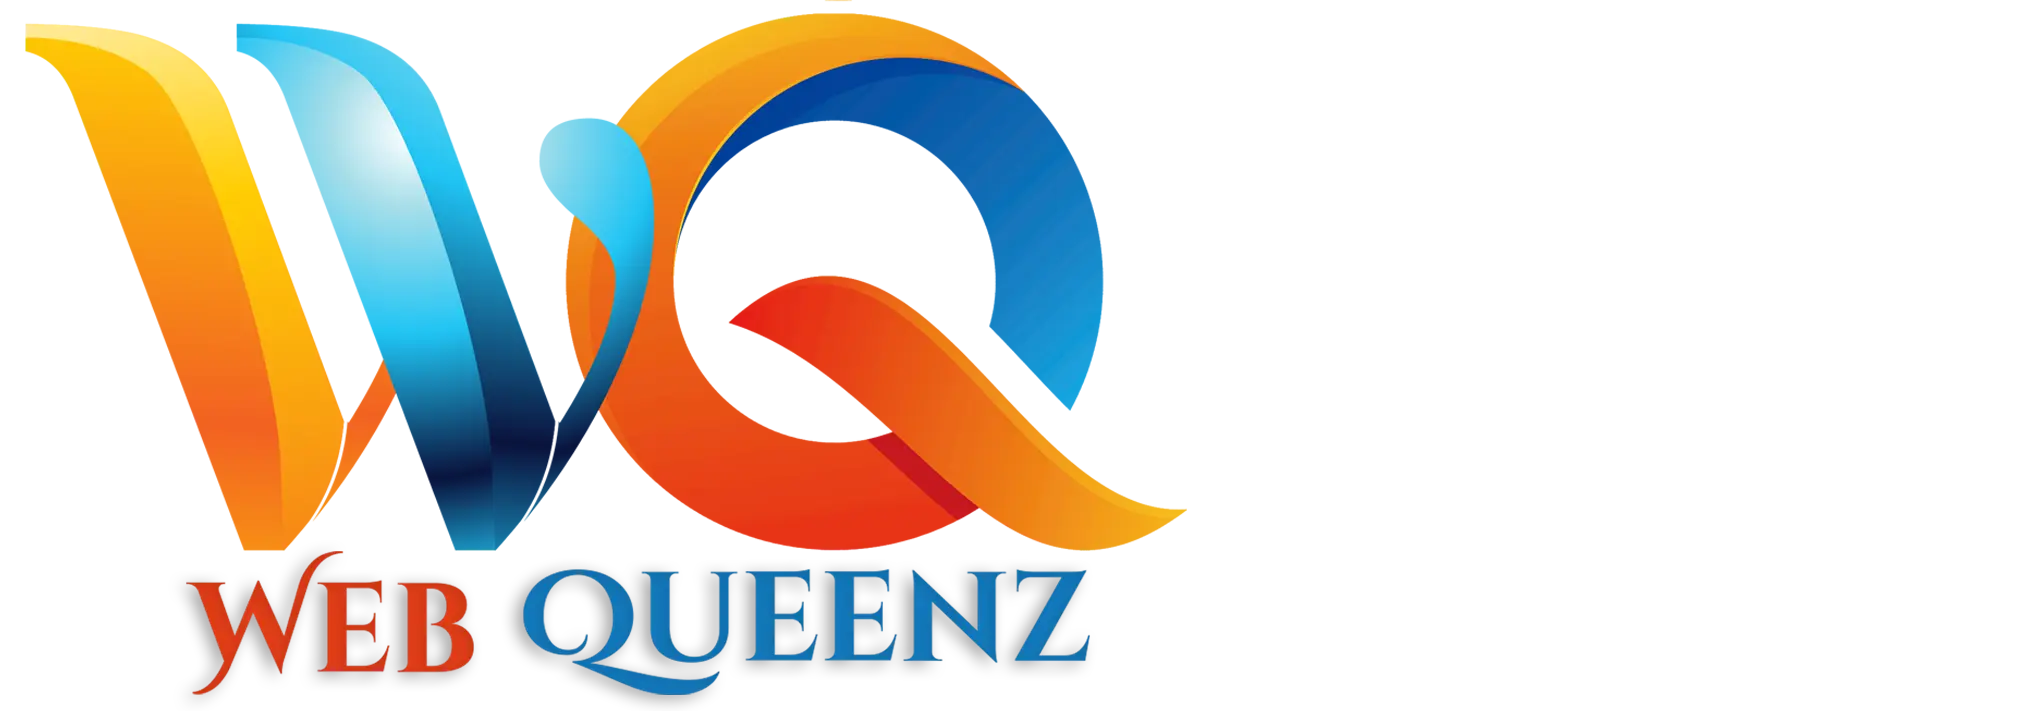 Web Queenz Logo